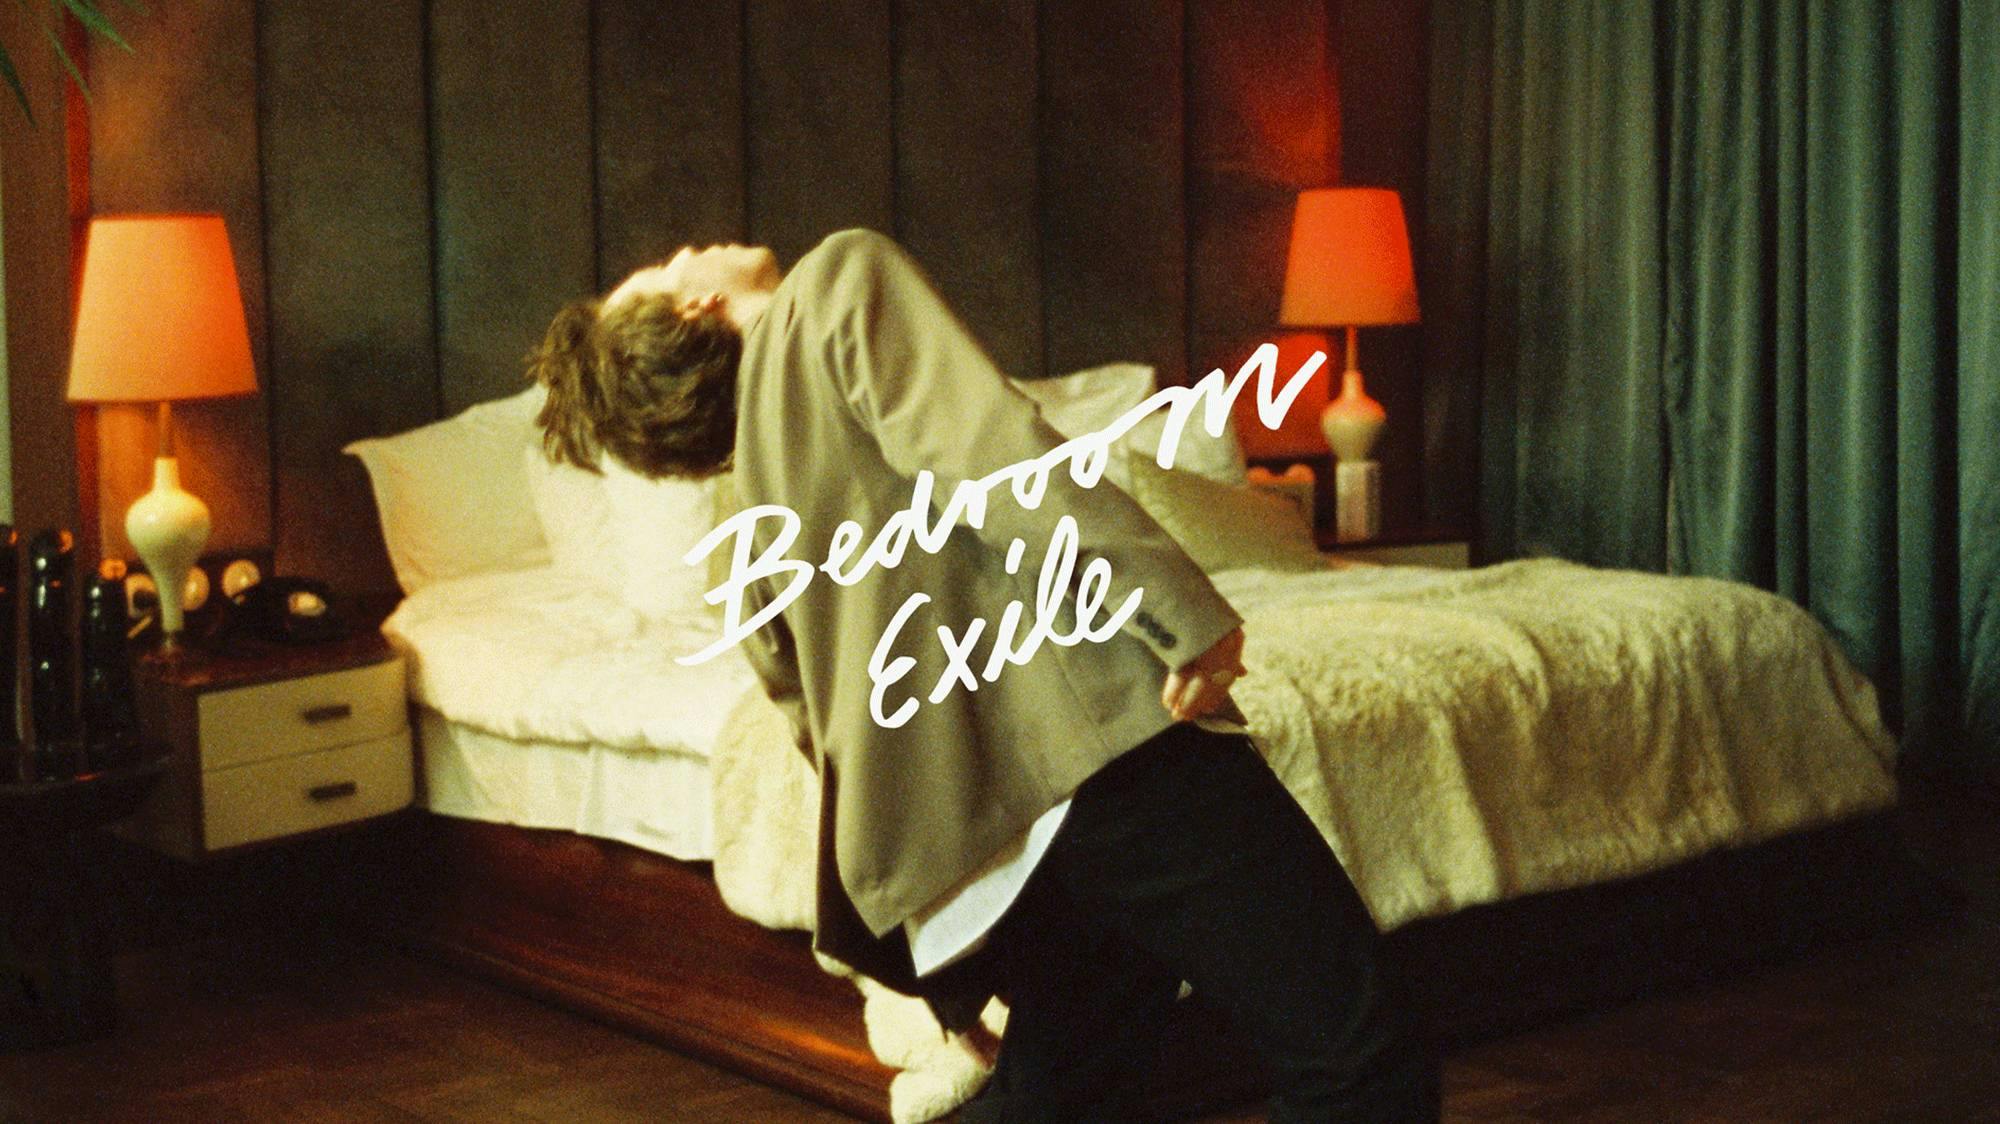 Bedroom Exile